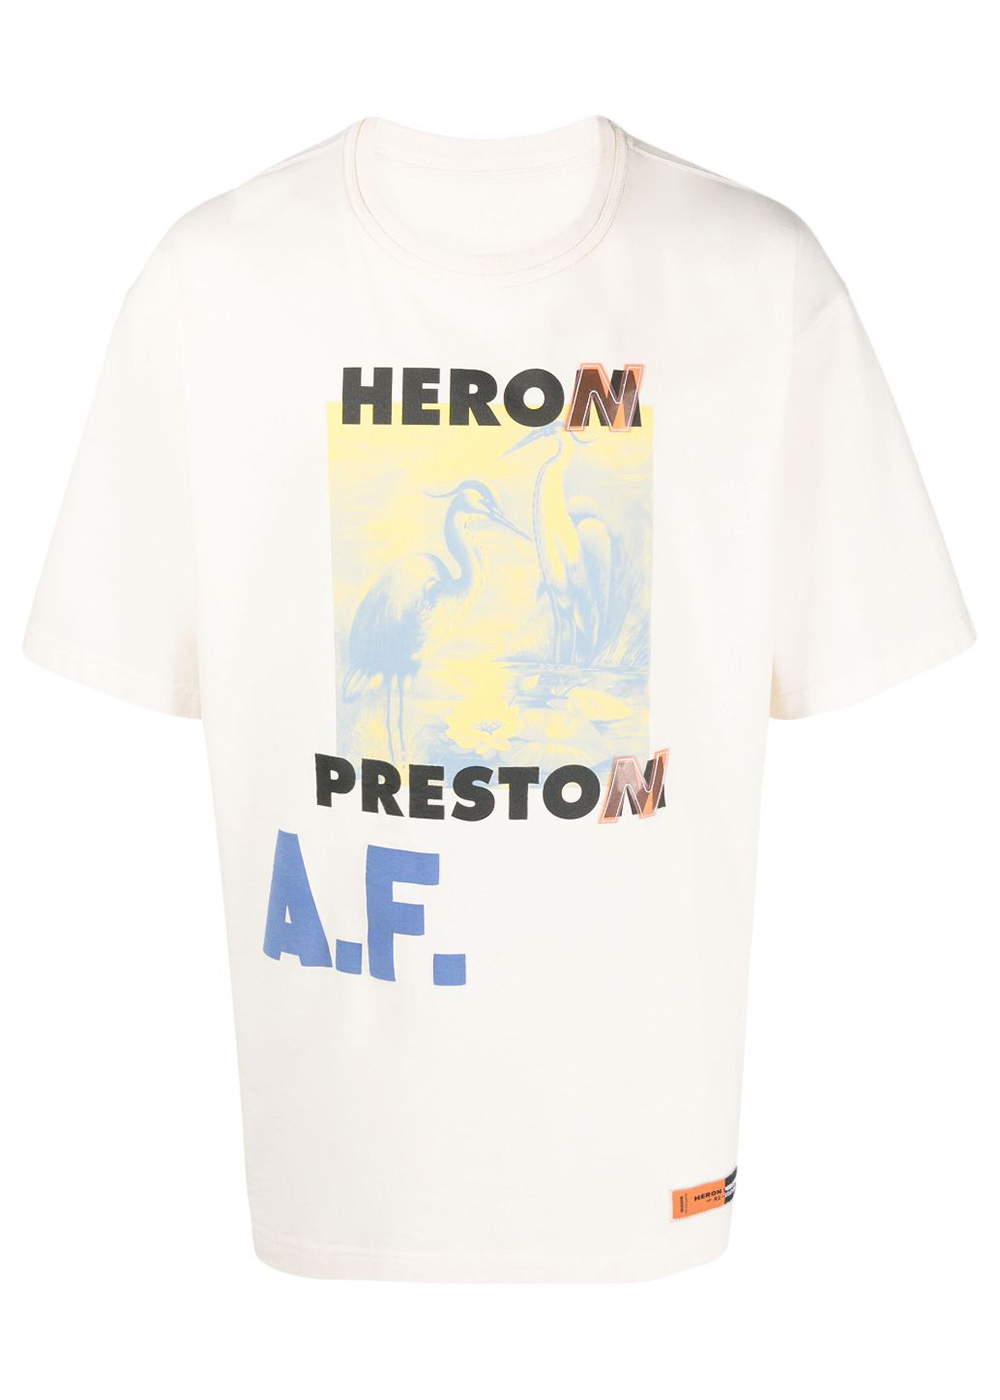 Heron Preston A.F. Authorised Oversized T-Shirt White/Lemon Yellow